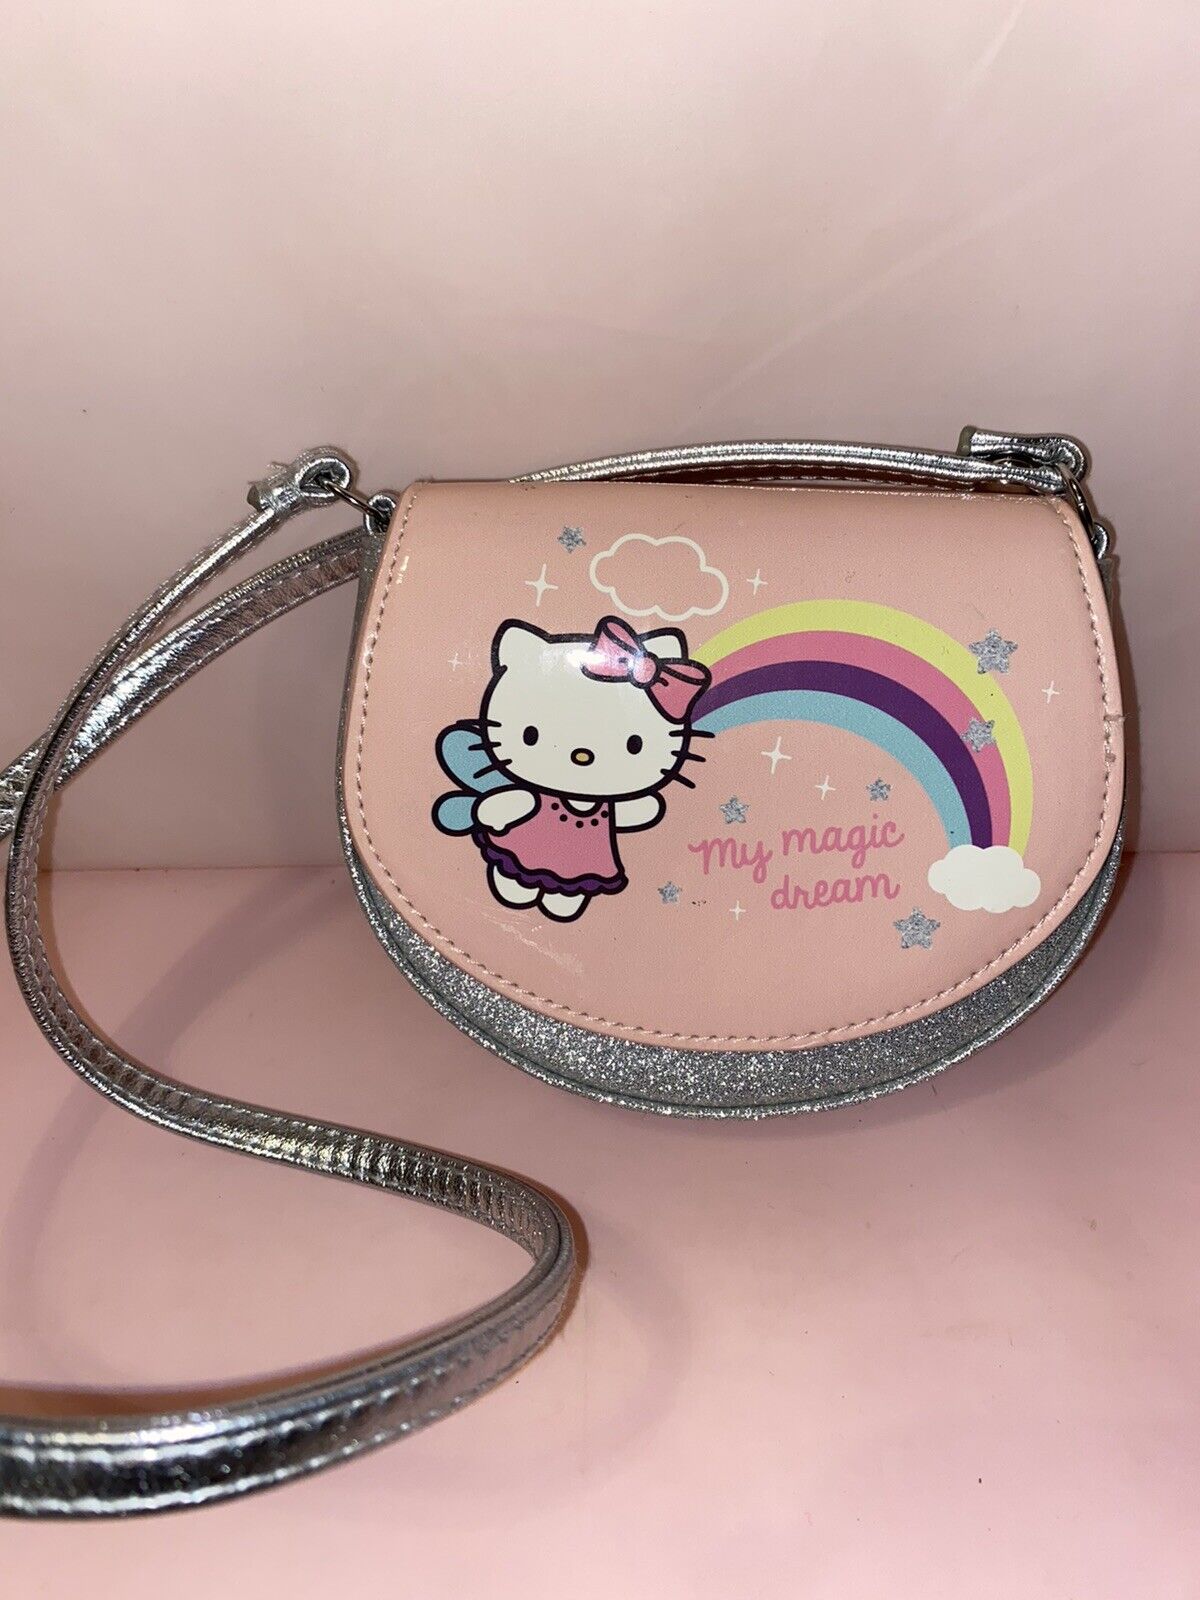 H&M Hello Kitty Sanrio Girl Purse Silver Sparkly Pink Rainbow Fairy Kawaii Cute